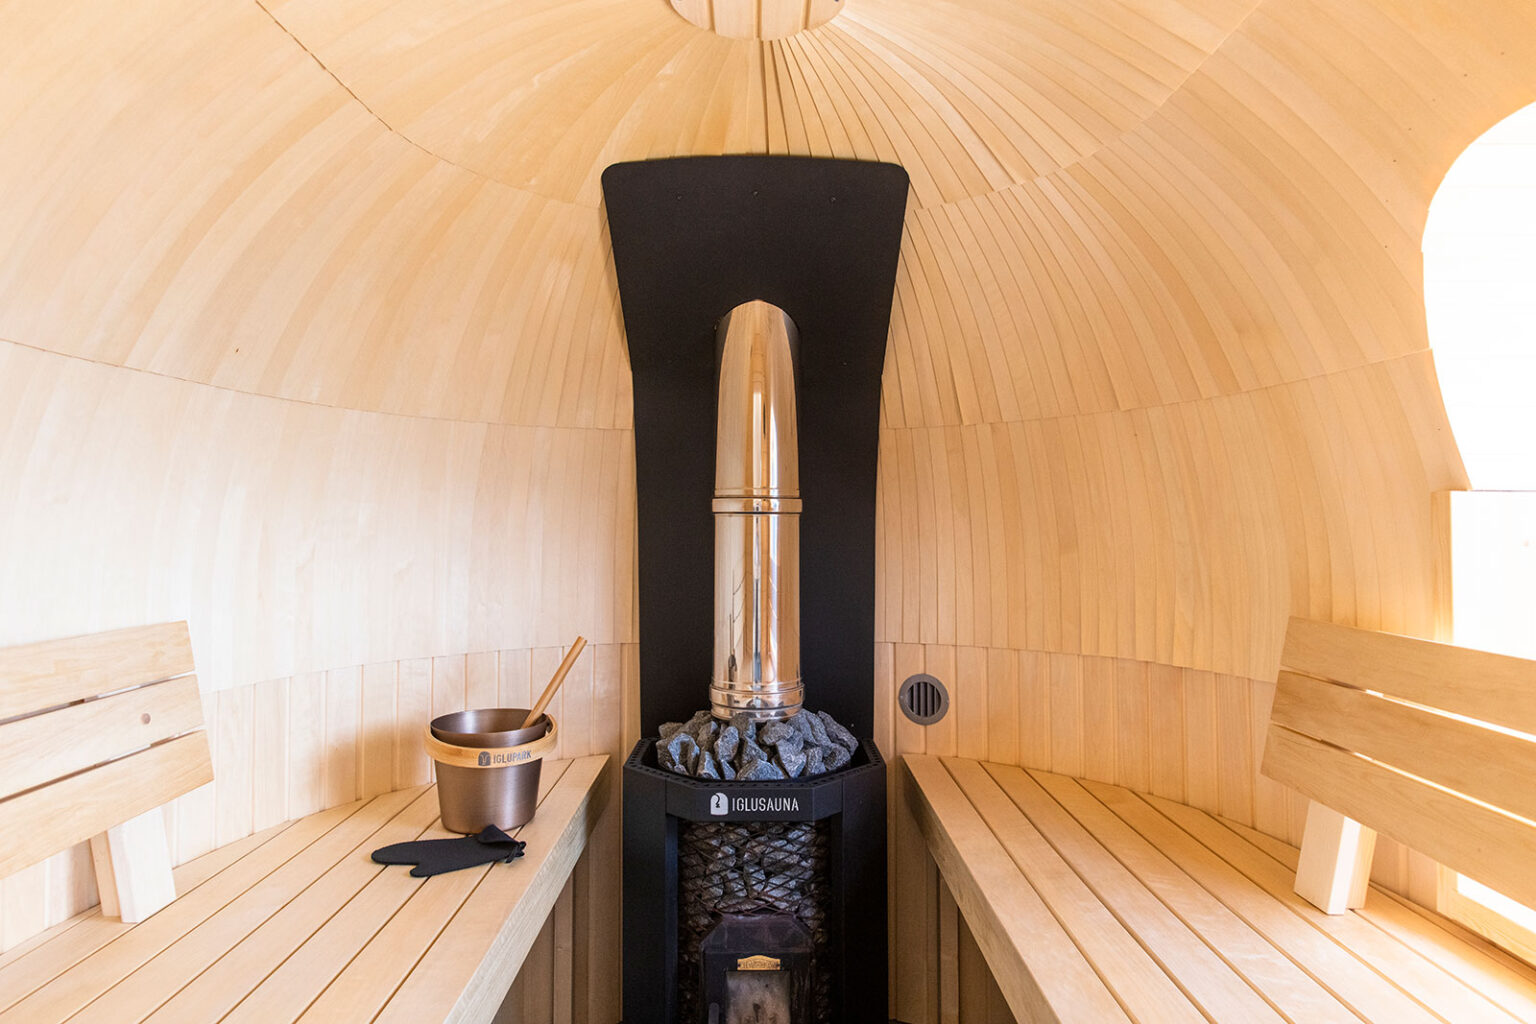 Iglusauna – Rent a sauna in Tallinn